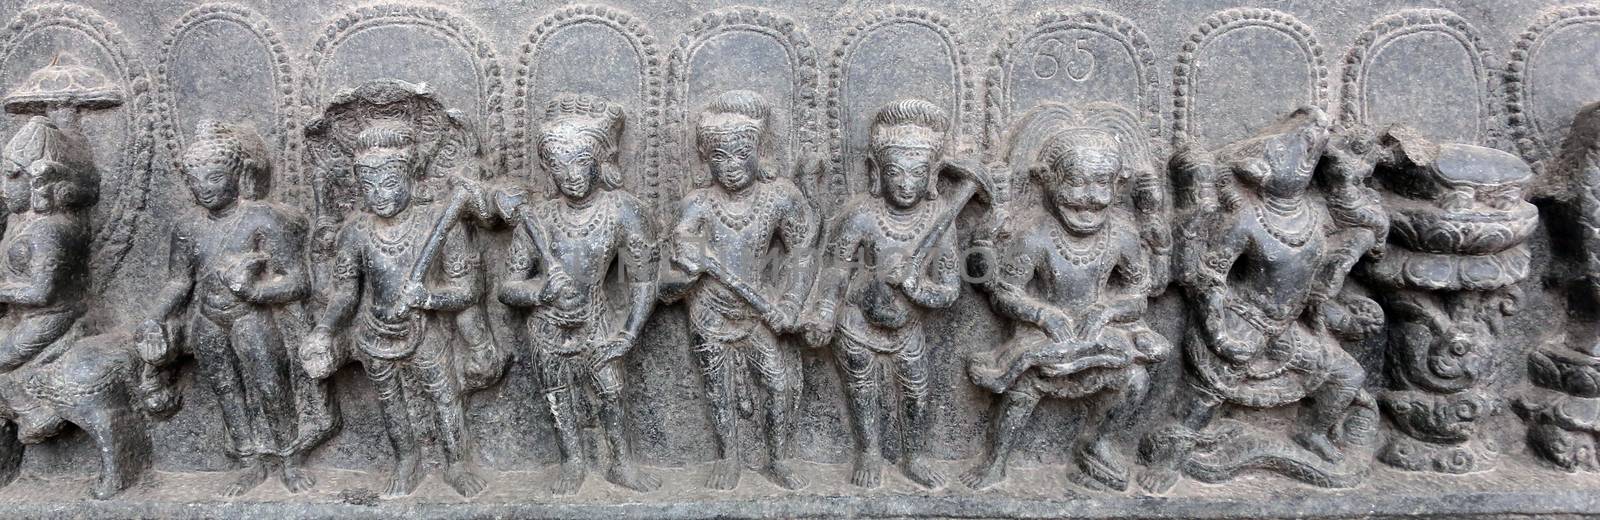 Dasavatara, from 10/11th century found in Basalt, Bihar now exposed in the Indian Museum in Kolkata